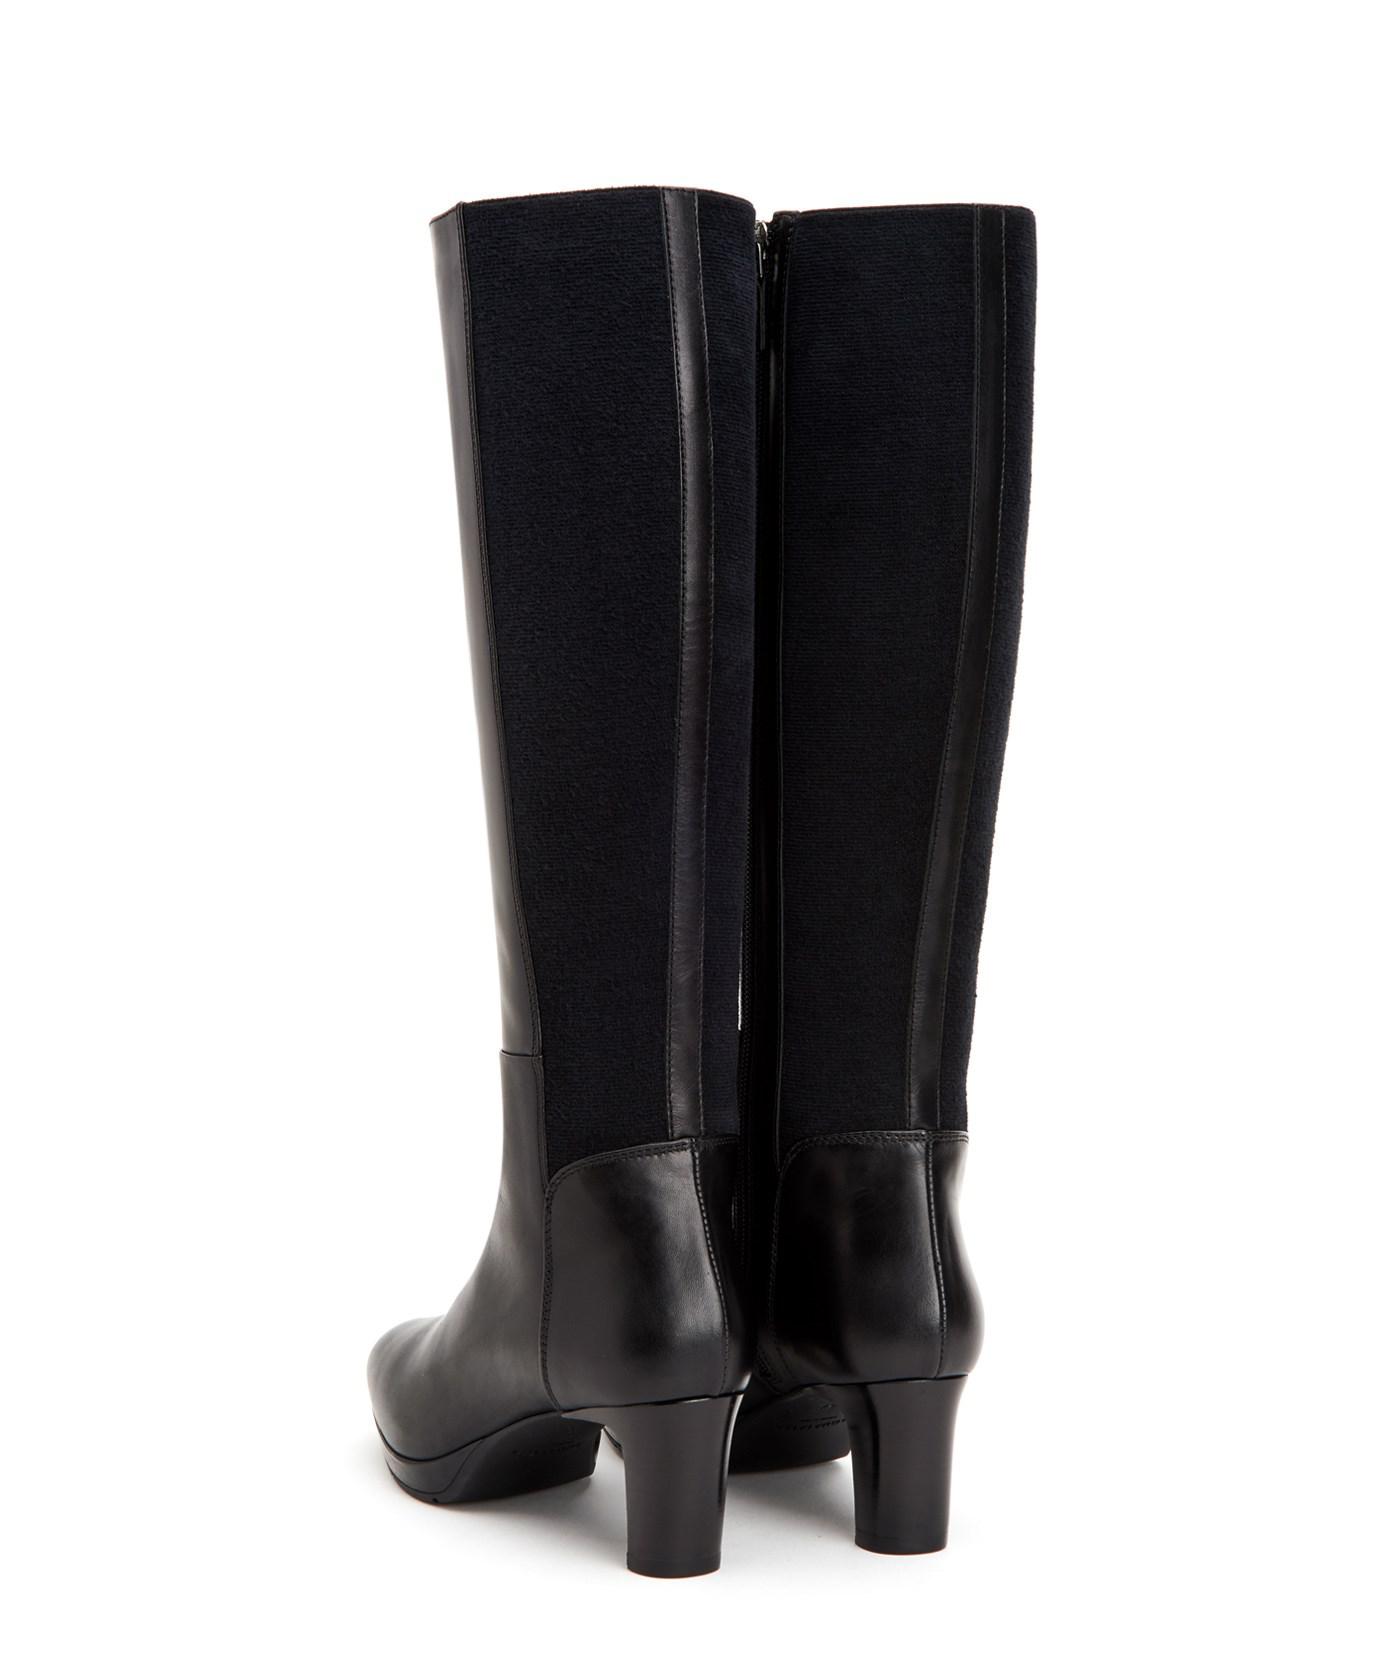 aquatalia dena waterproof leather boot